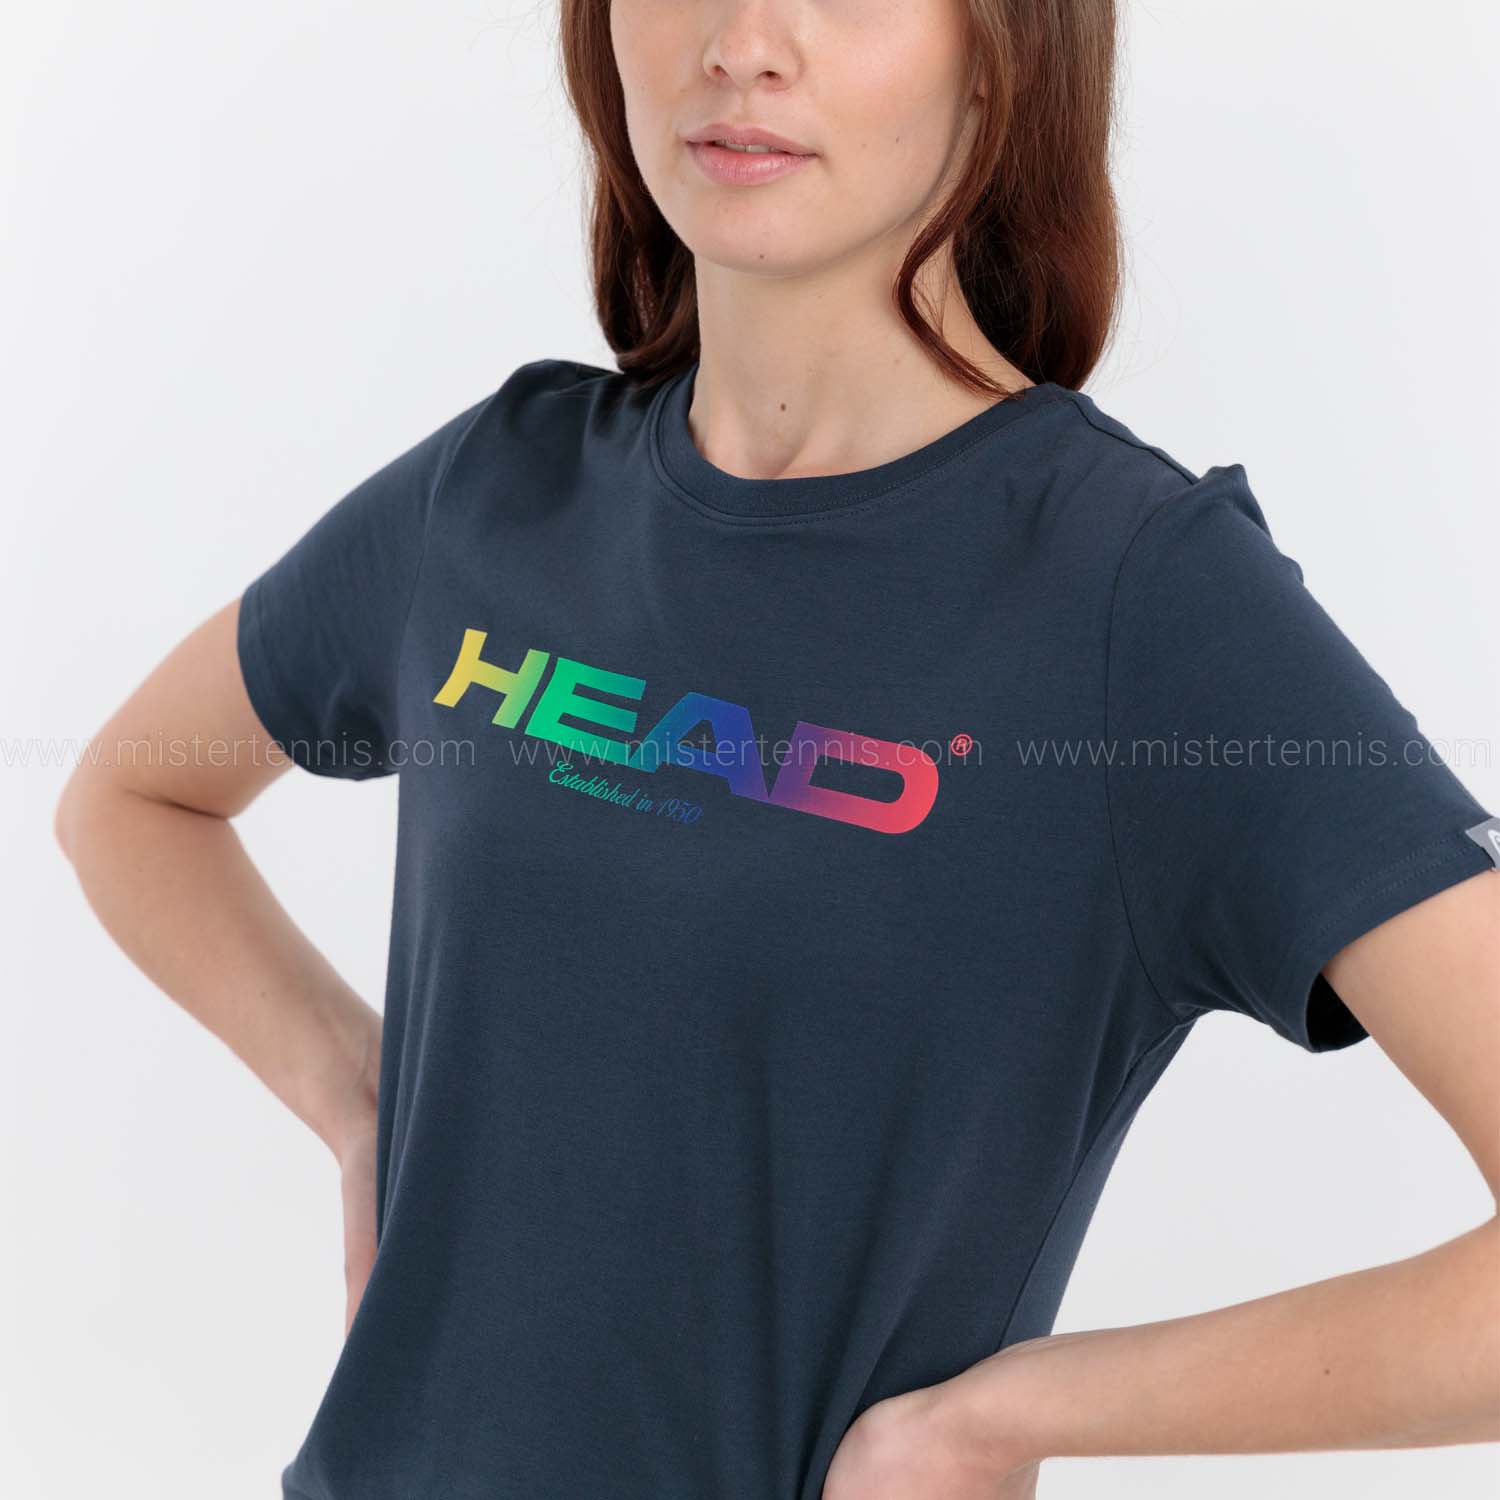 Head Rainbow T-Shirt - Navy